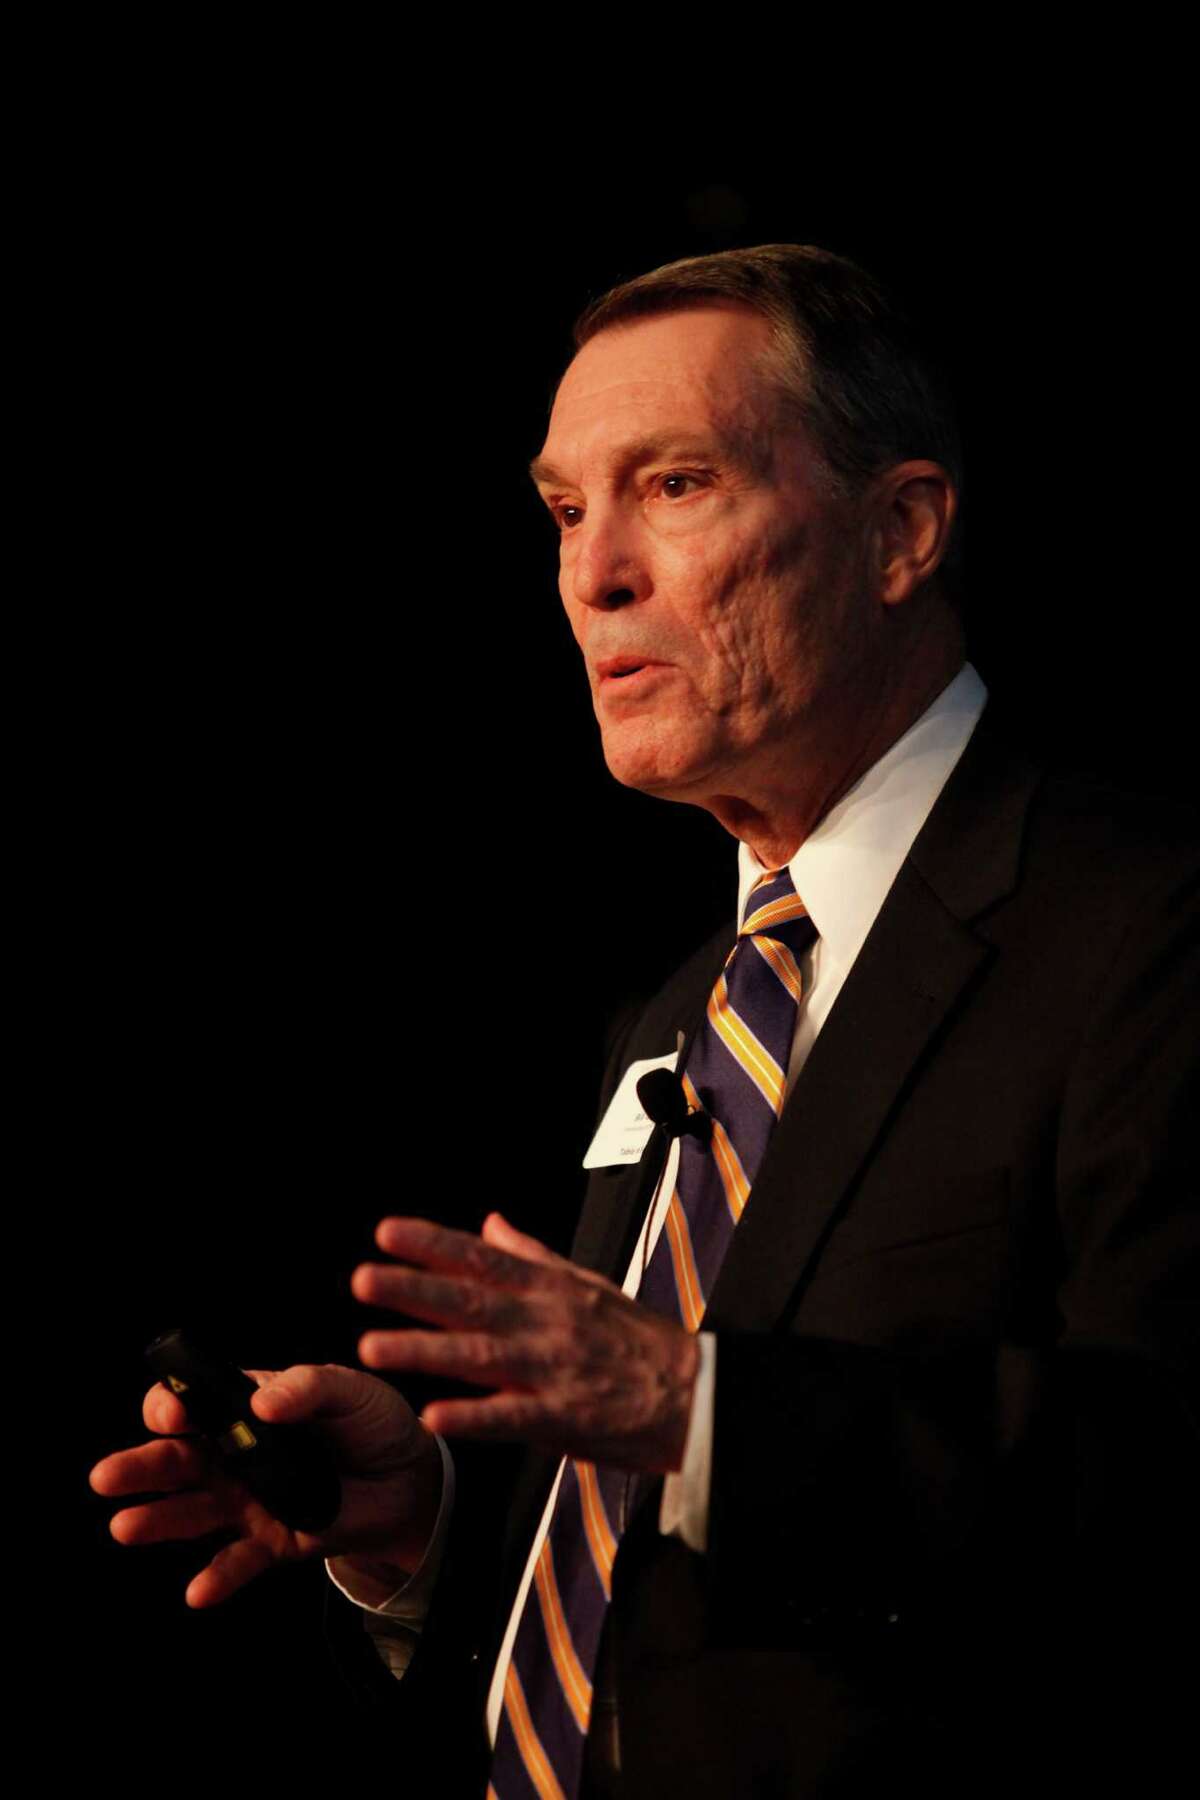 Bill Gilmer, the director of the University of Houston's Institute for Regional Forecasting, gives his annual economic talk at the Hyatt Regency Hotel, Nov. 14, 2013 in Houston. (Eric Kayne/For the Chronicle)